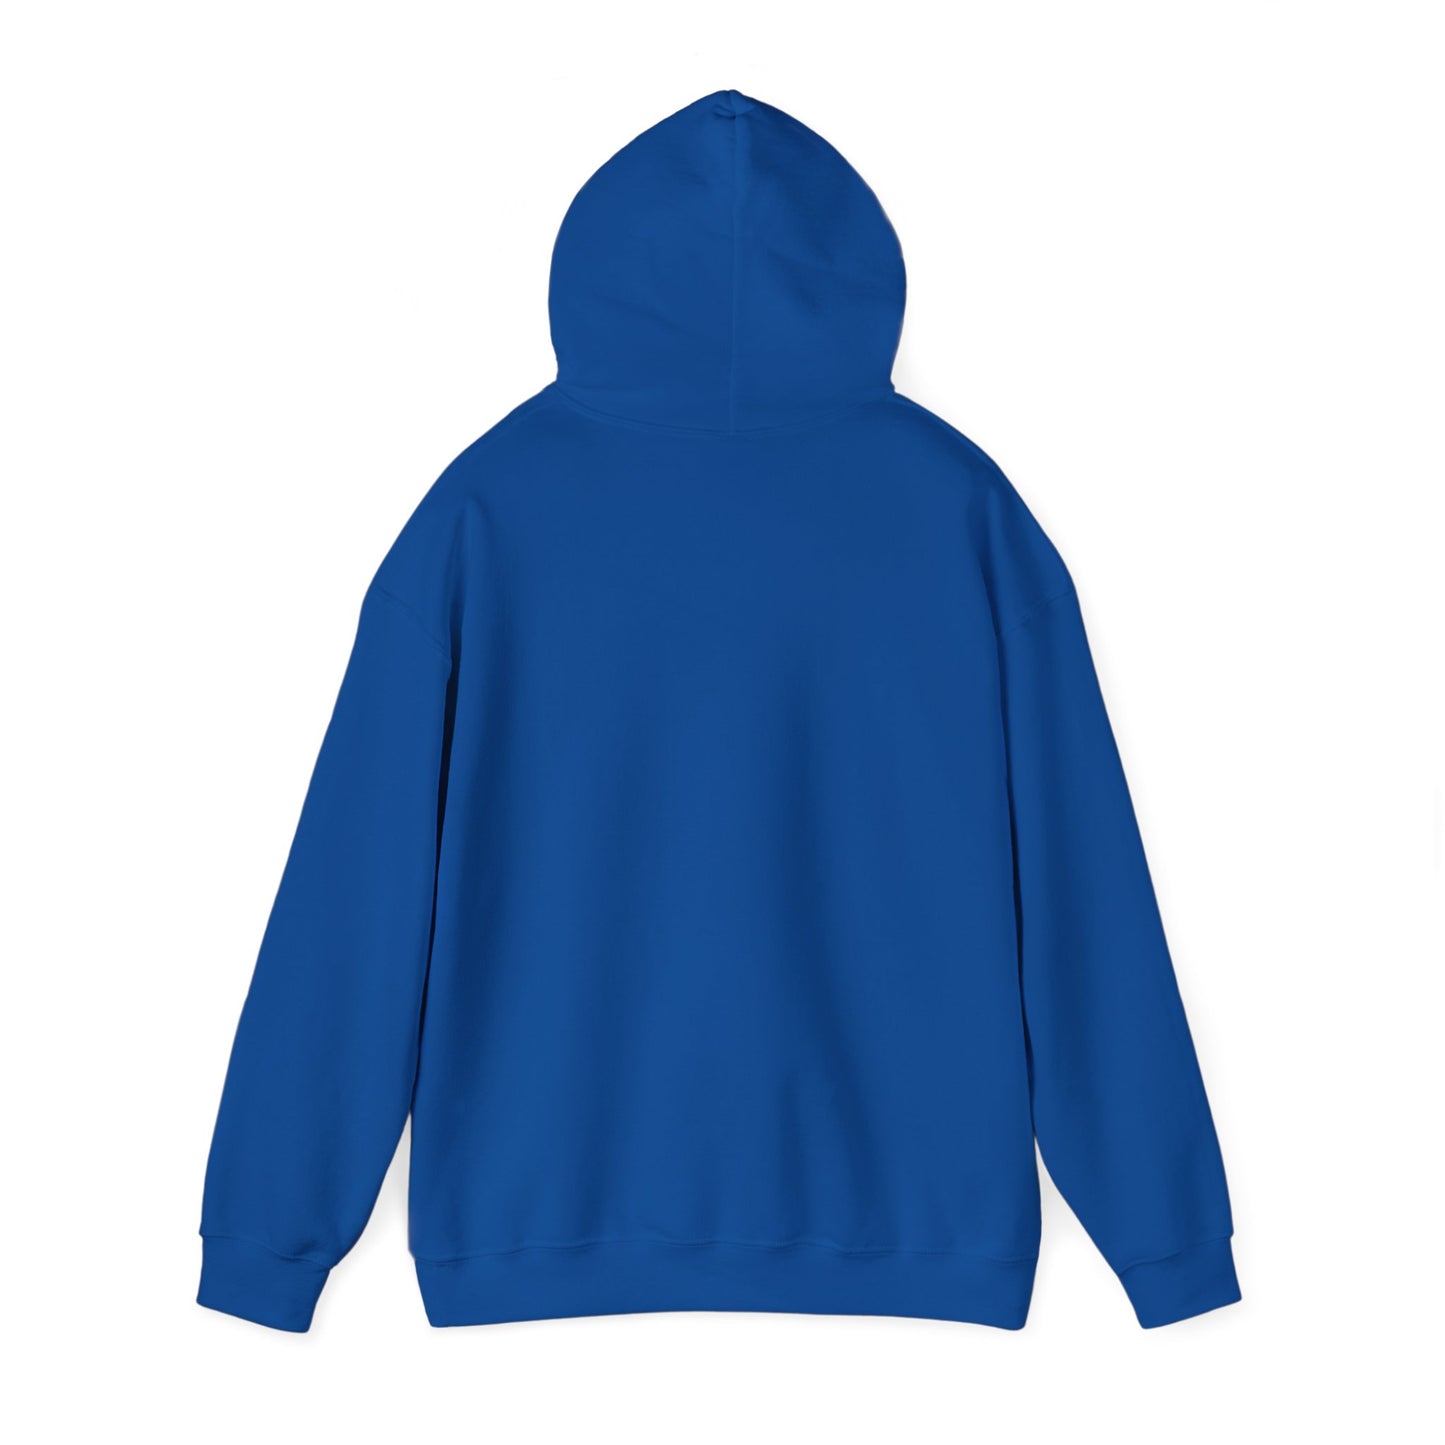 Gildan_Dont feel Alone Nature_Unisex Heavy Blend™ Hooded Sweatshirt